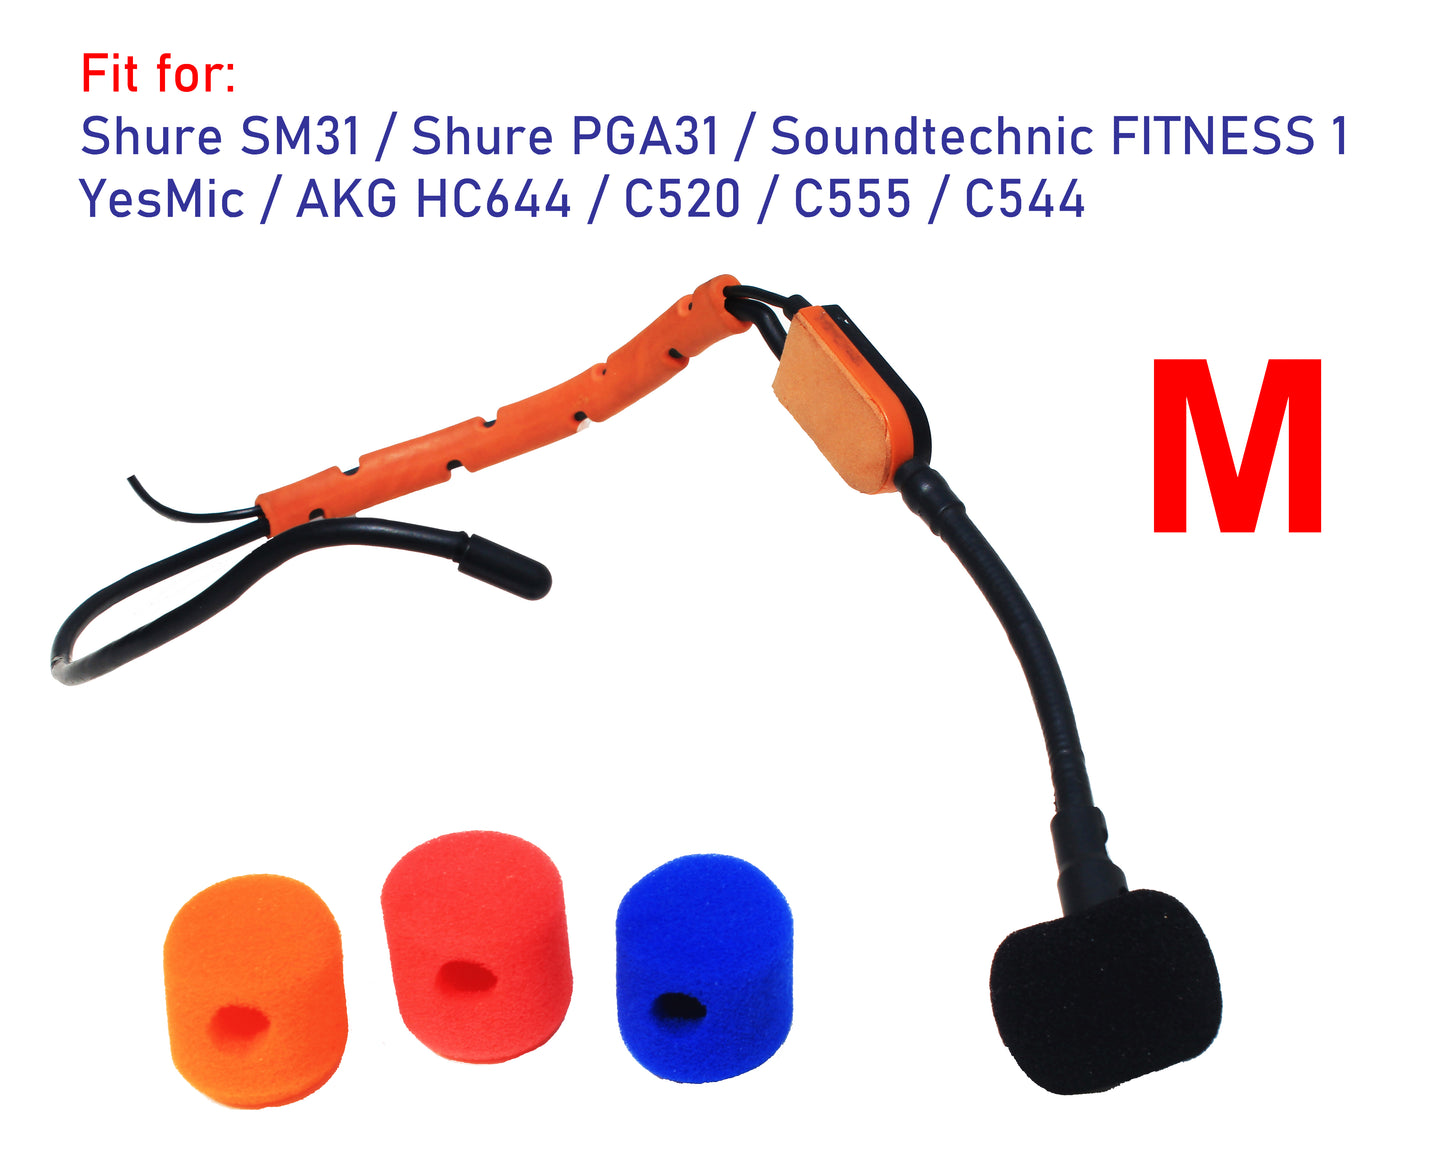 Shure SM31 / PGA31 / YesMic / Soundtechnic FITNESS 1 / AKG HC644 MD / C520 / C555 / C544 Oval Windscreen Mic Foams Windshield - 10-packs